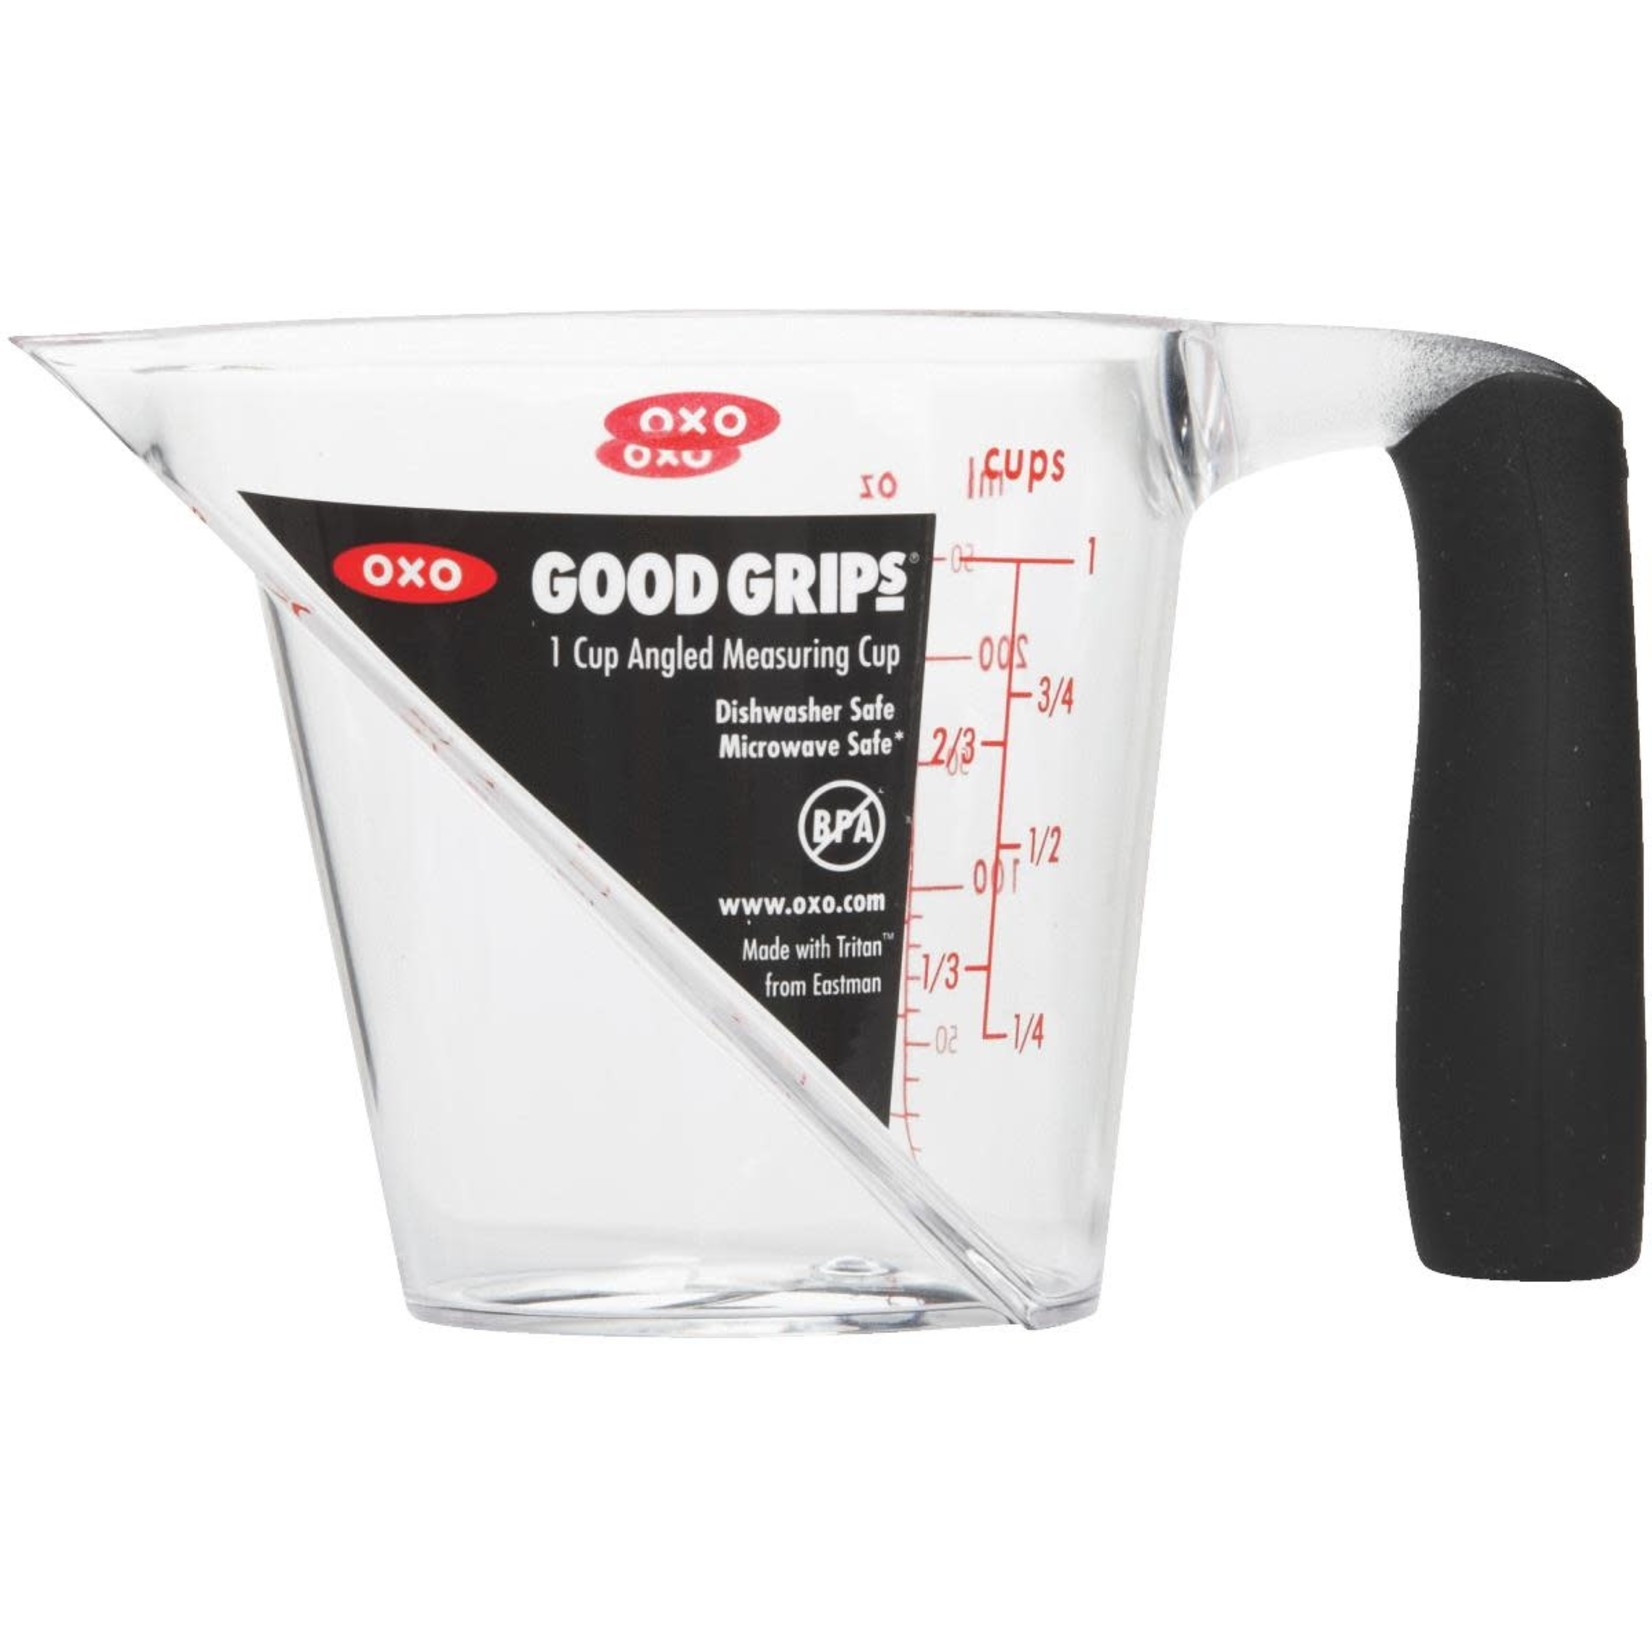 https://cdn.shoplightspeed.com/shops/627977/files/41107353/1652x1652x2/oxo22-gg-1-cup-angled-measuring-cup.jpg